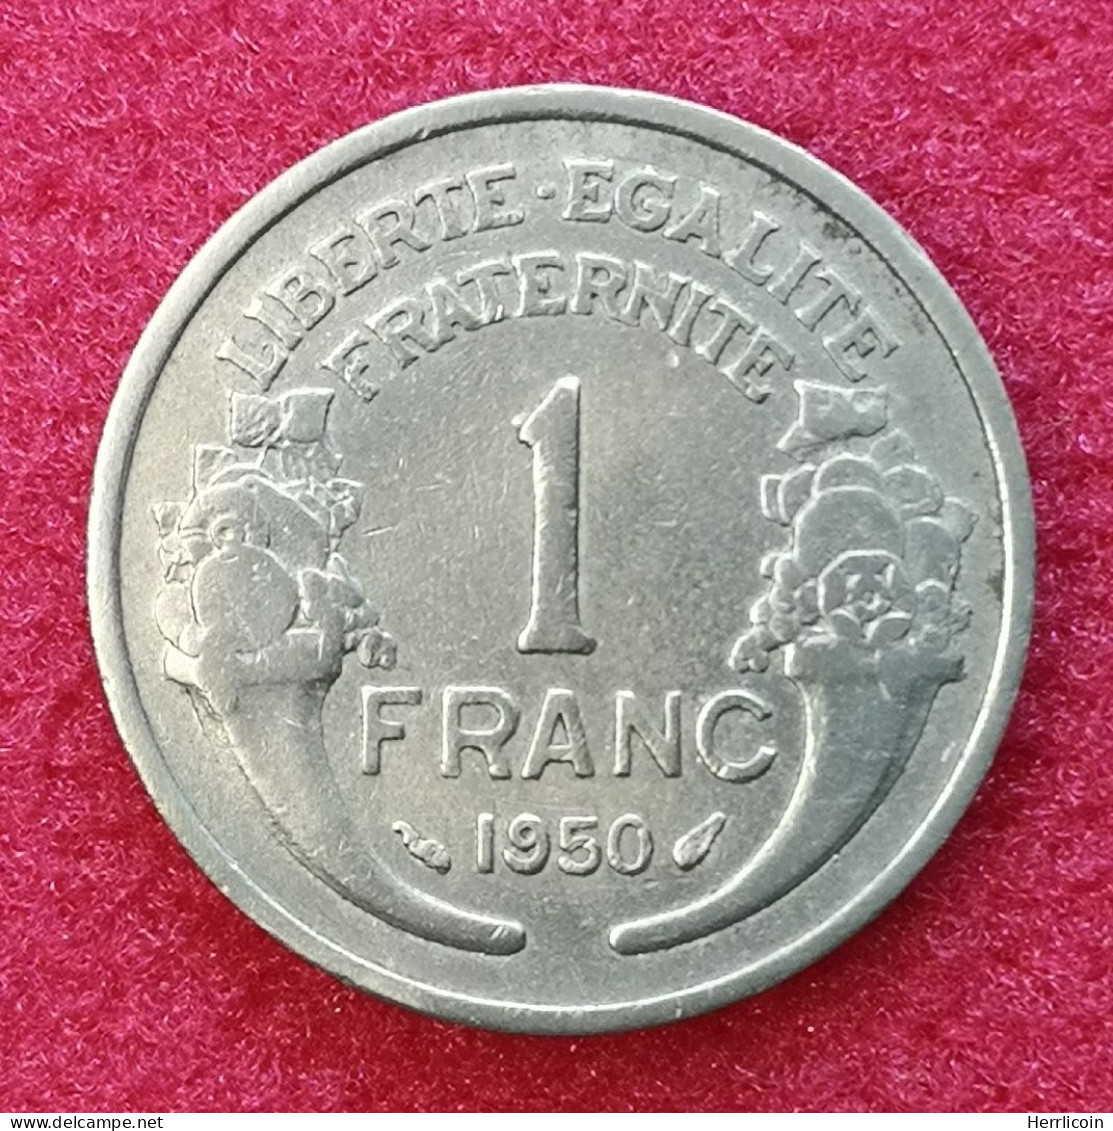 Monnaie France - 1950 - 1 Franc Morlon Aluminium, Légère (1,3g) - 1 Franc